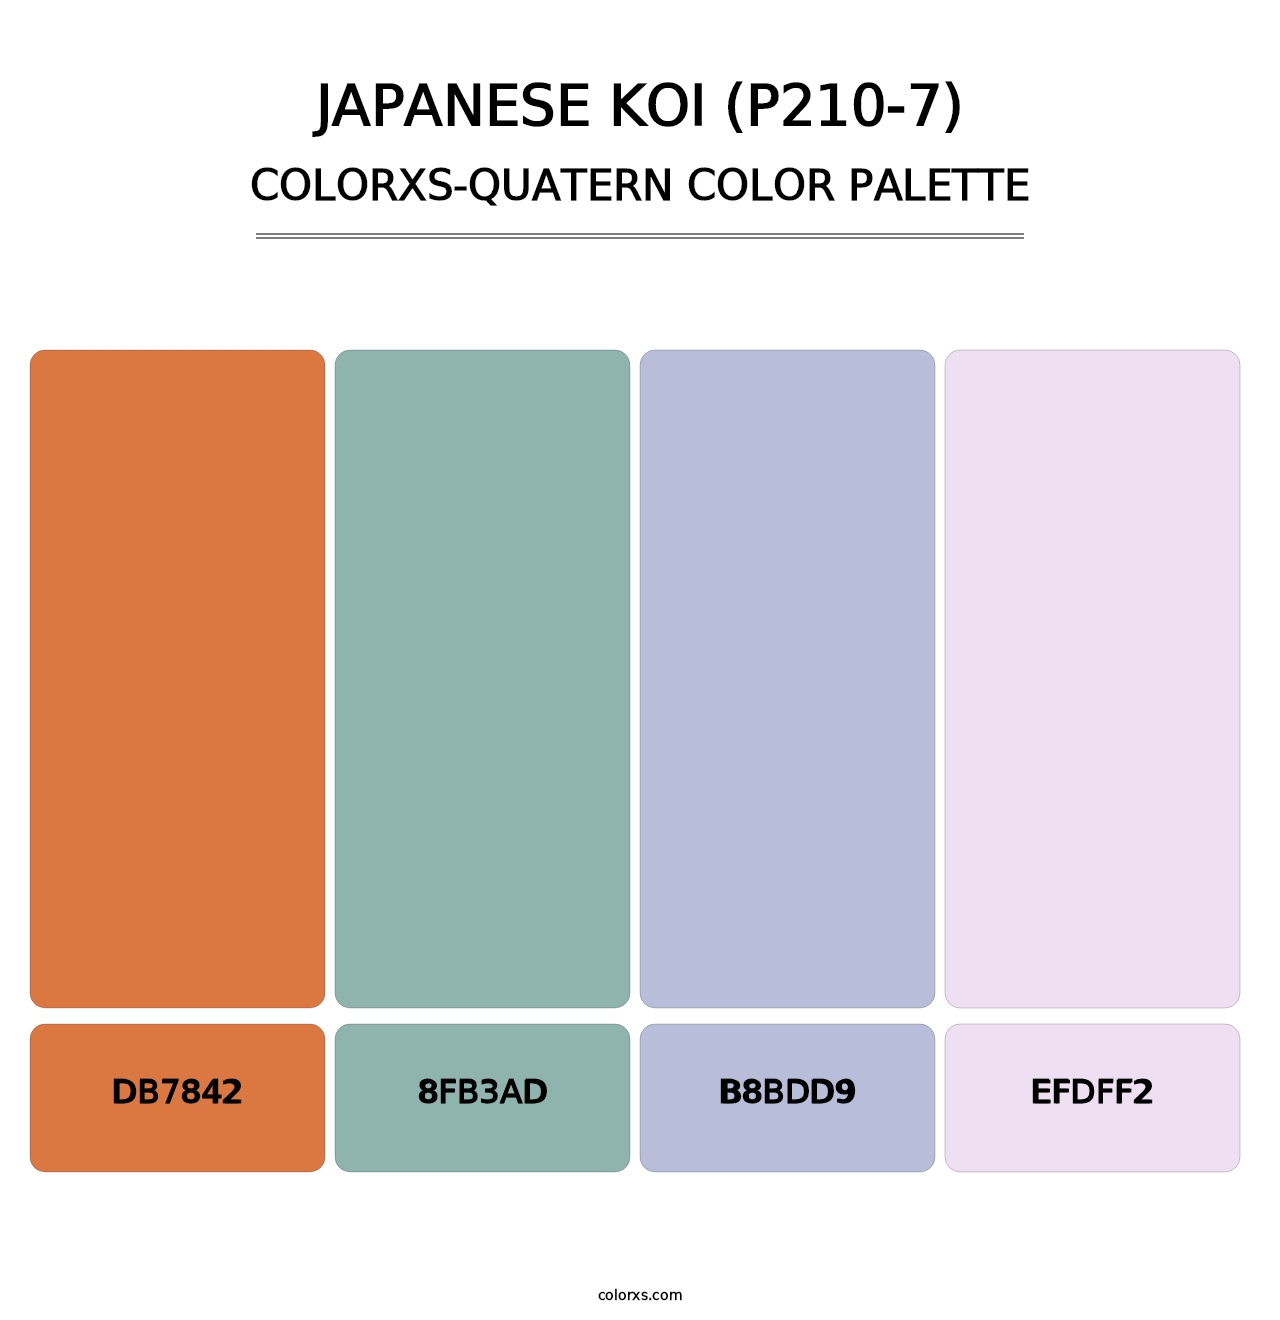 Japanese Koi (P210-7) - Colorxs Quatern Palette